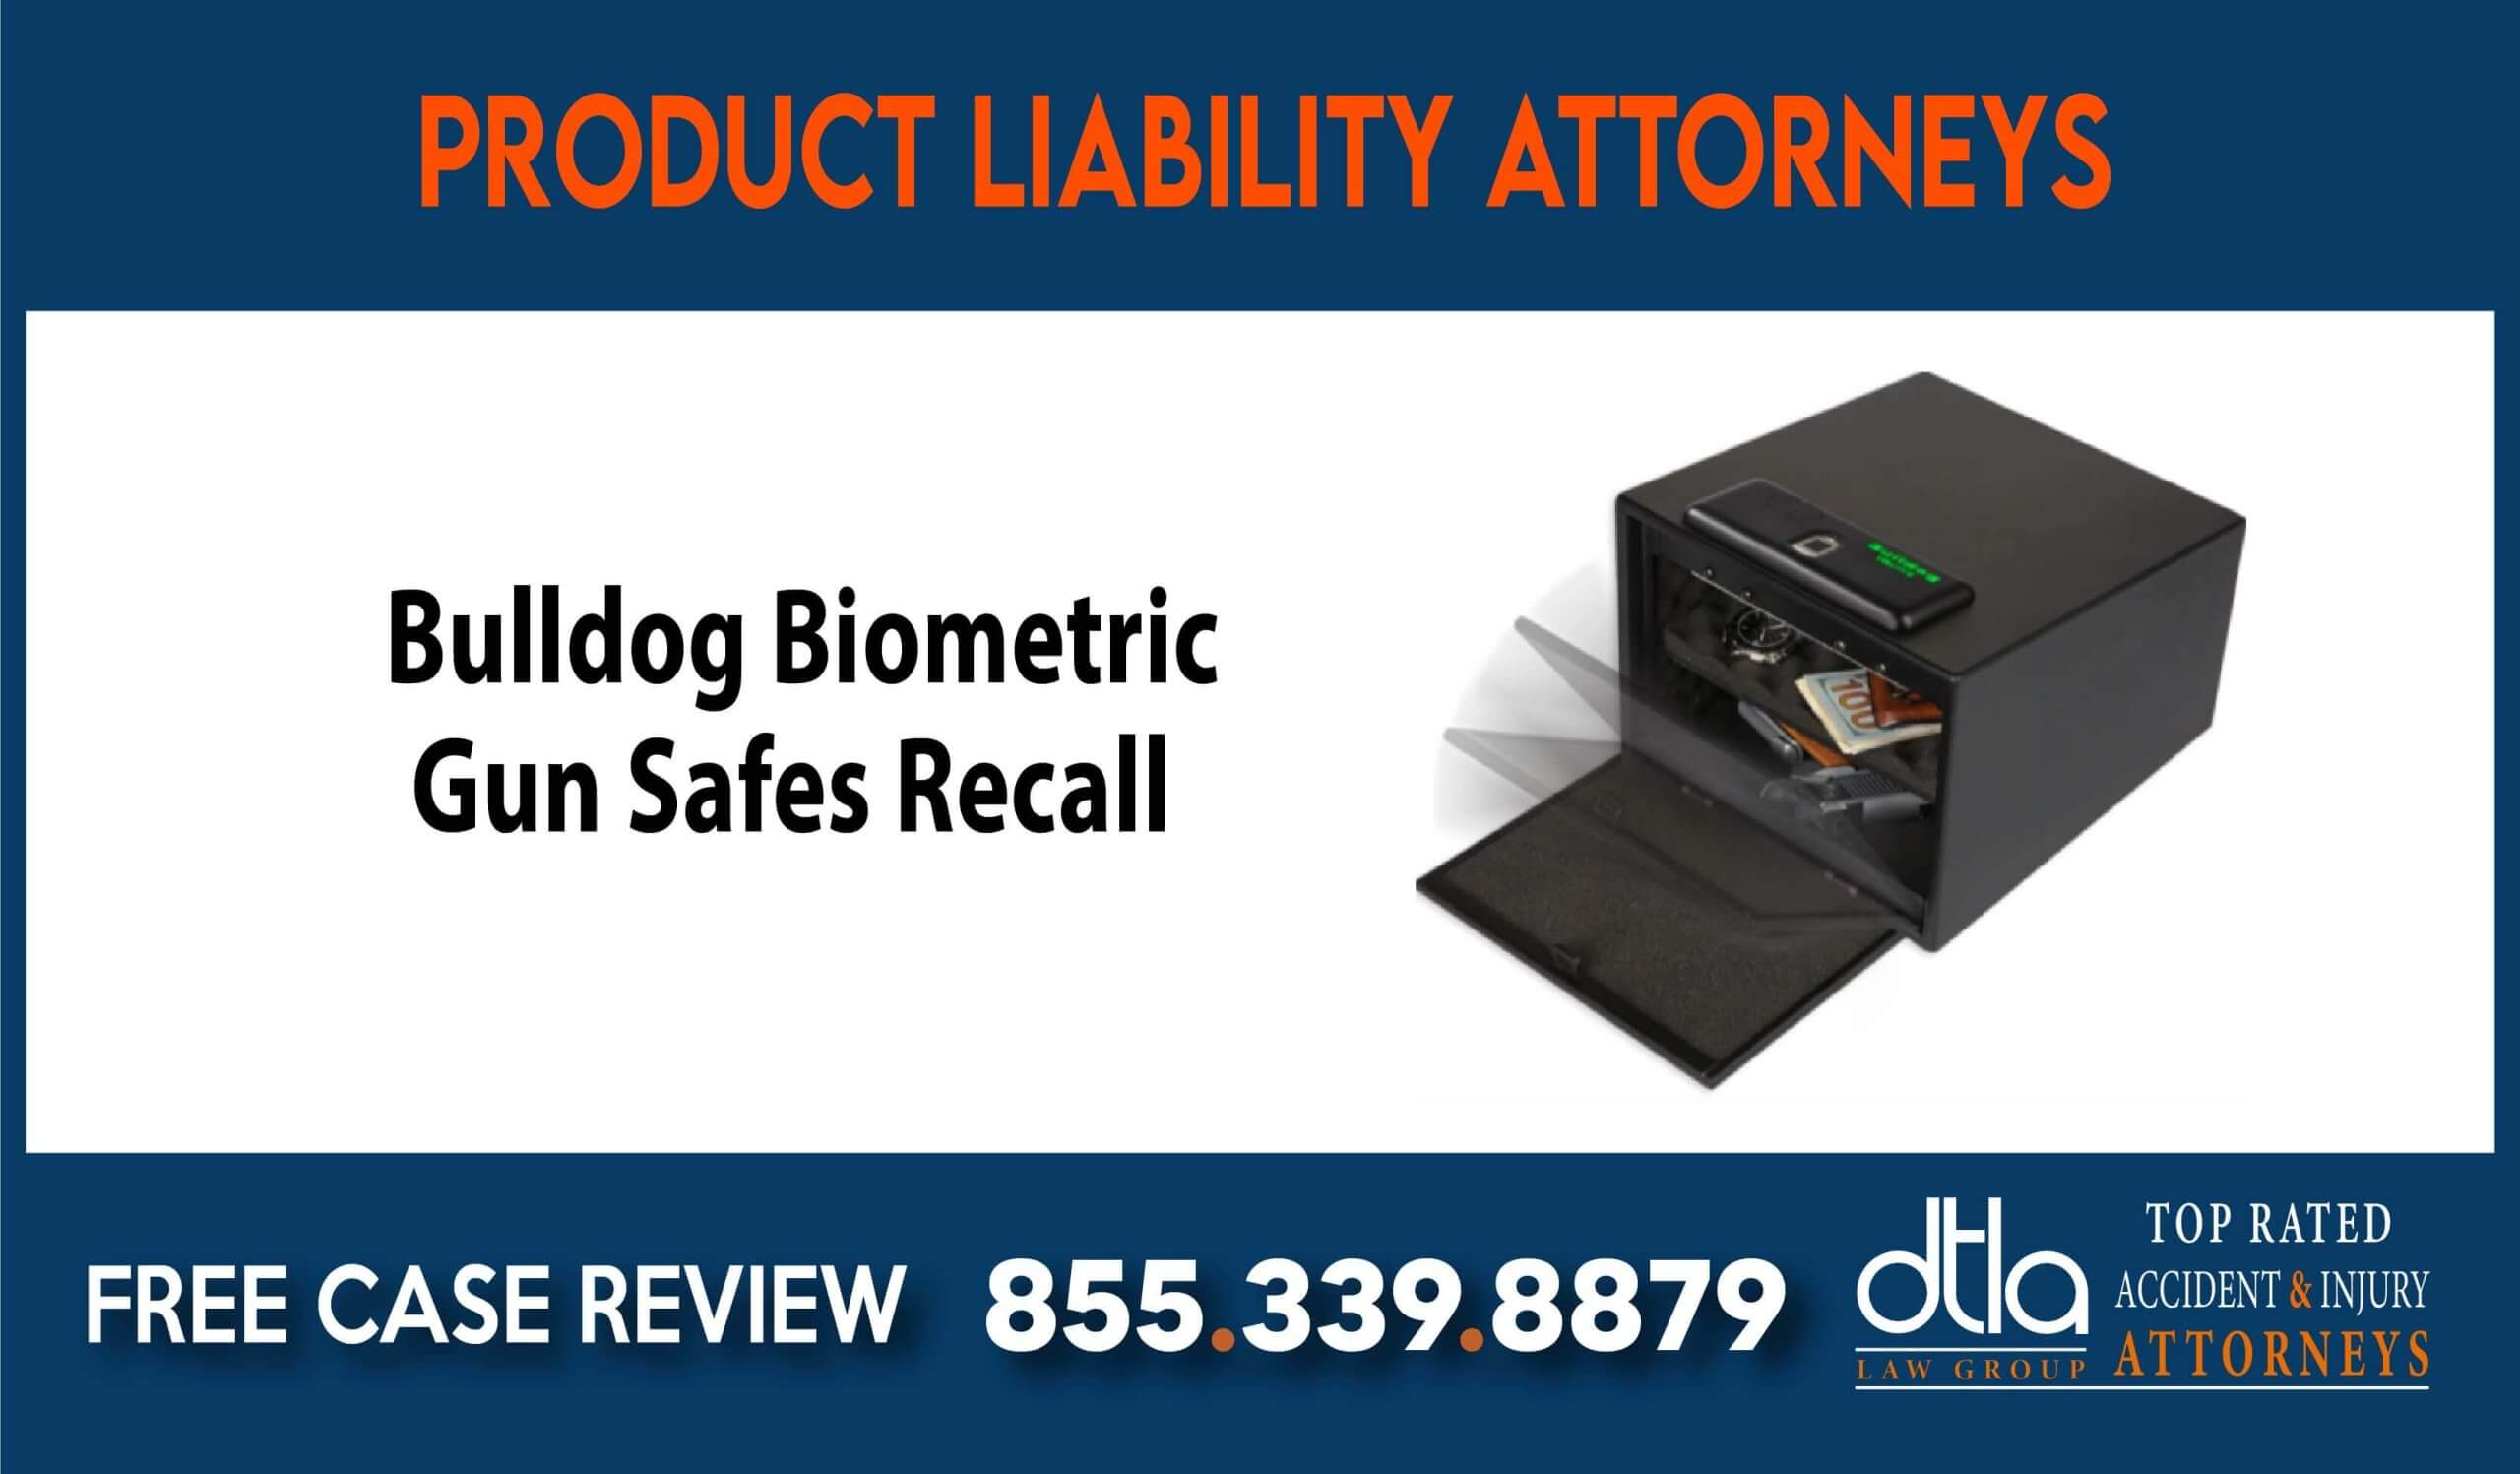 Bulldog Biometric Gun Safes Recall Class Action Lawsuit lawsuit liability compensation lawyer attorney sue